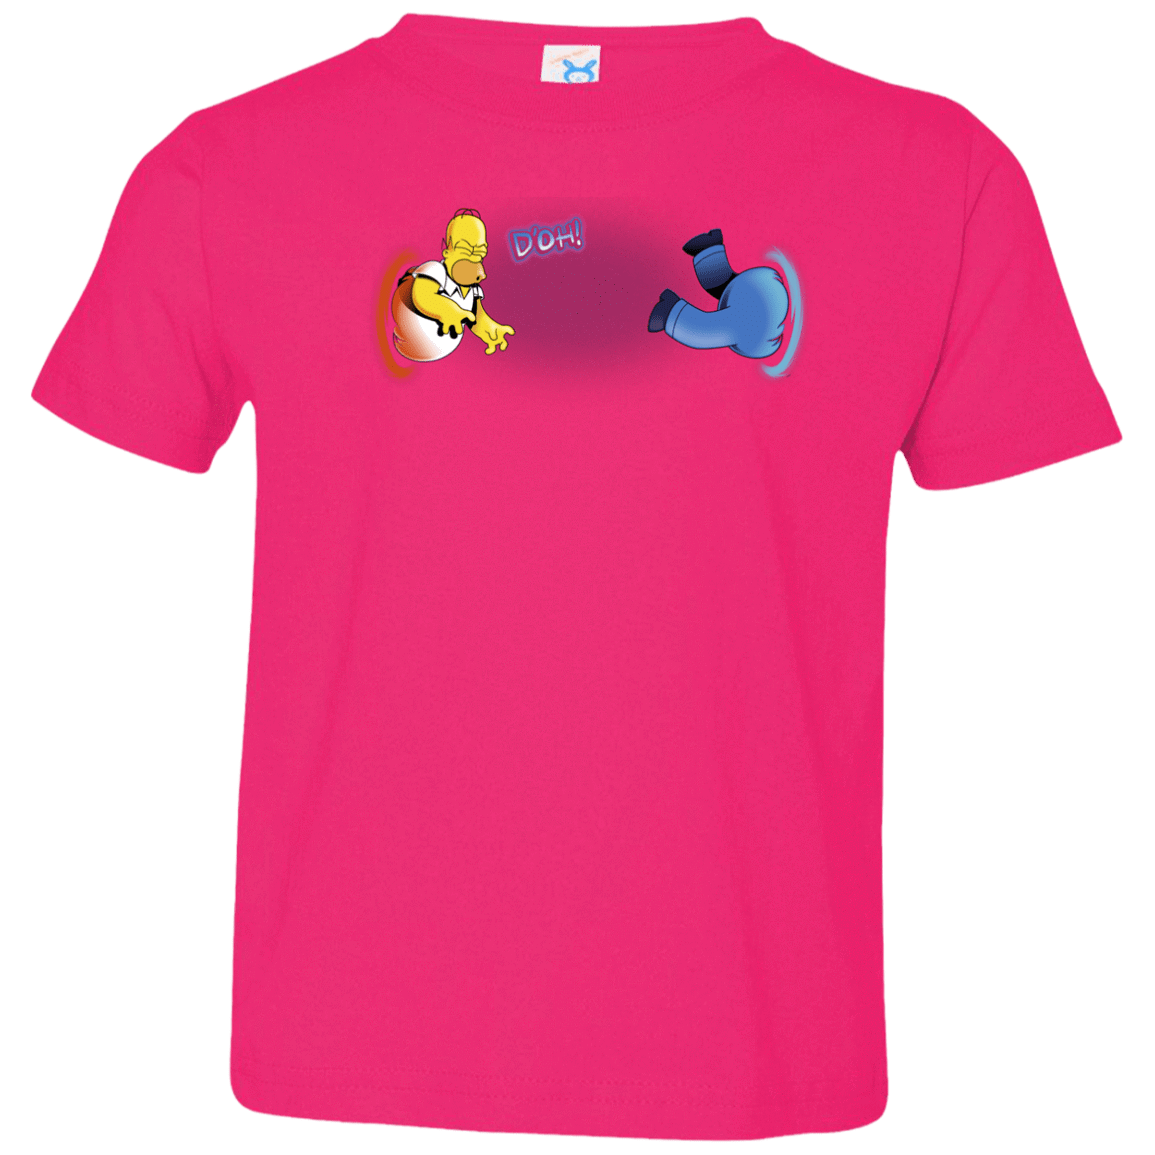 T-Shirts Hot Pink / 2T Portal D'oh Toddler Premium T-Shirt